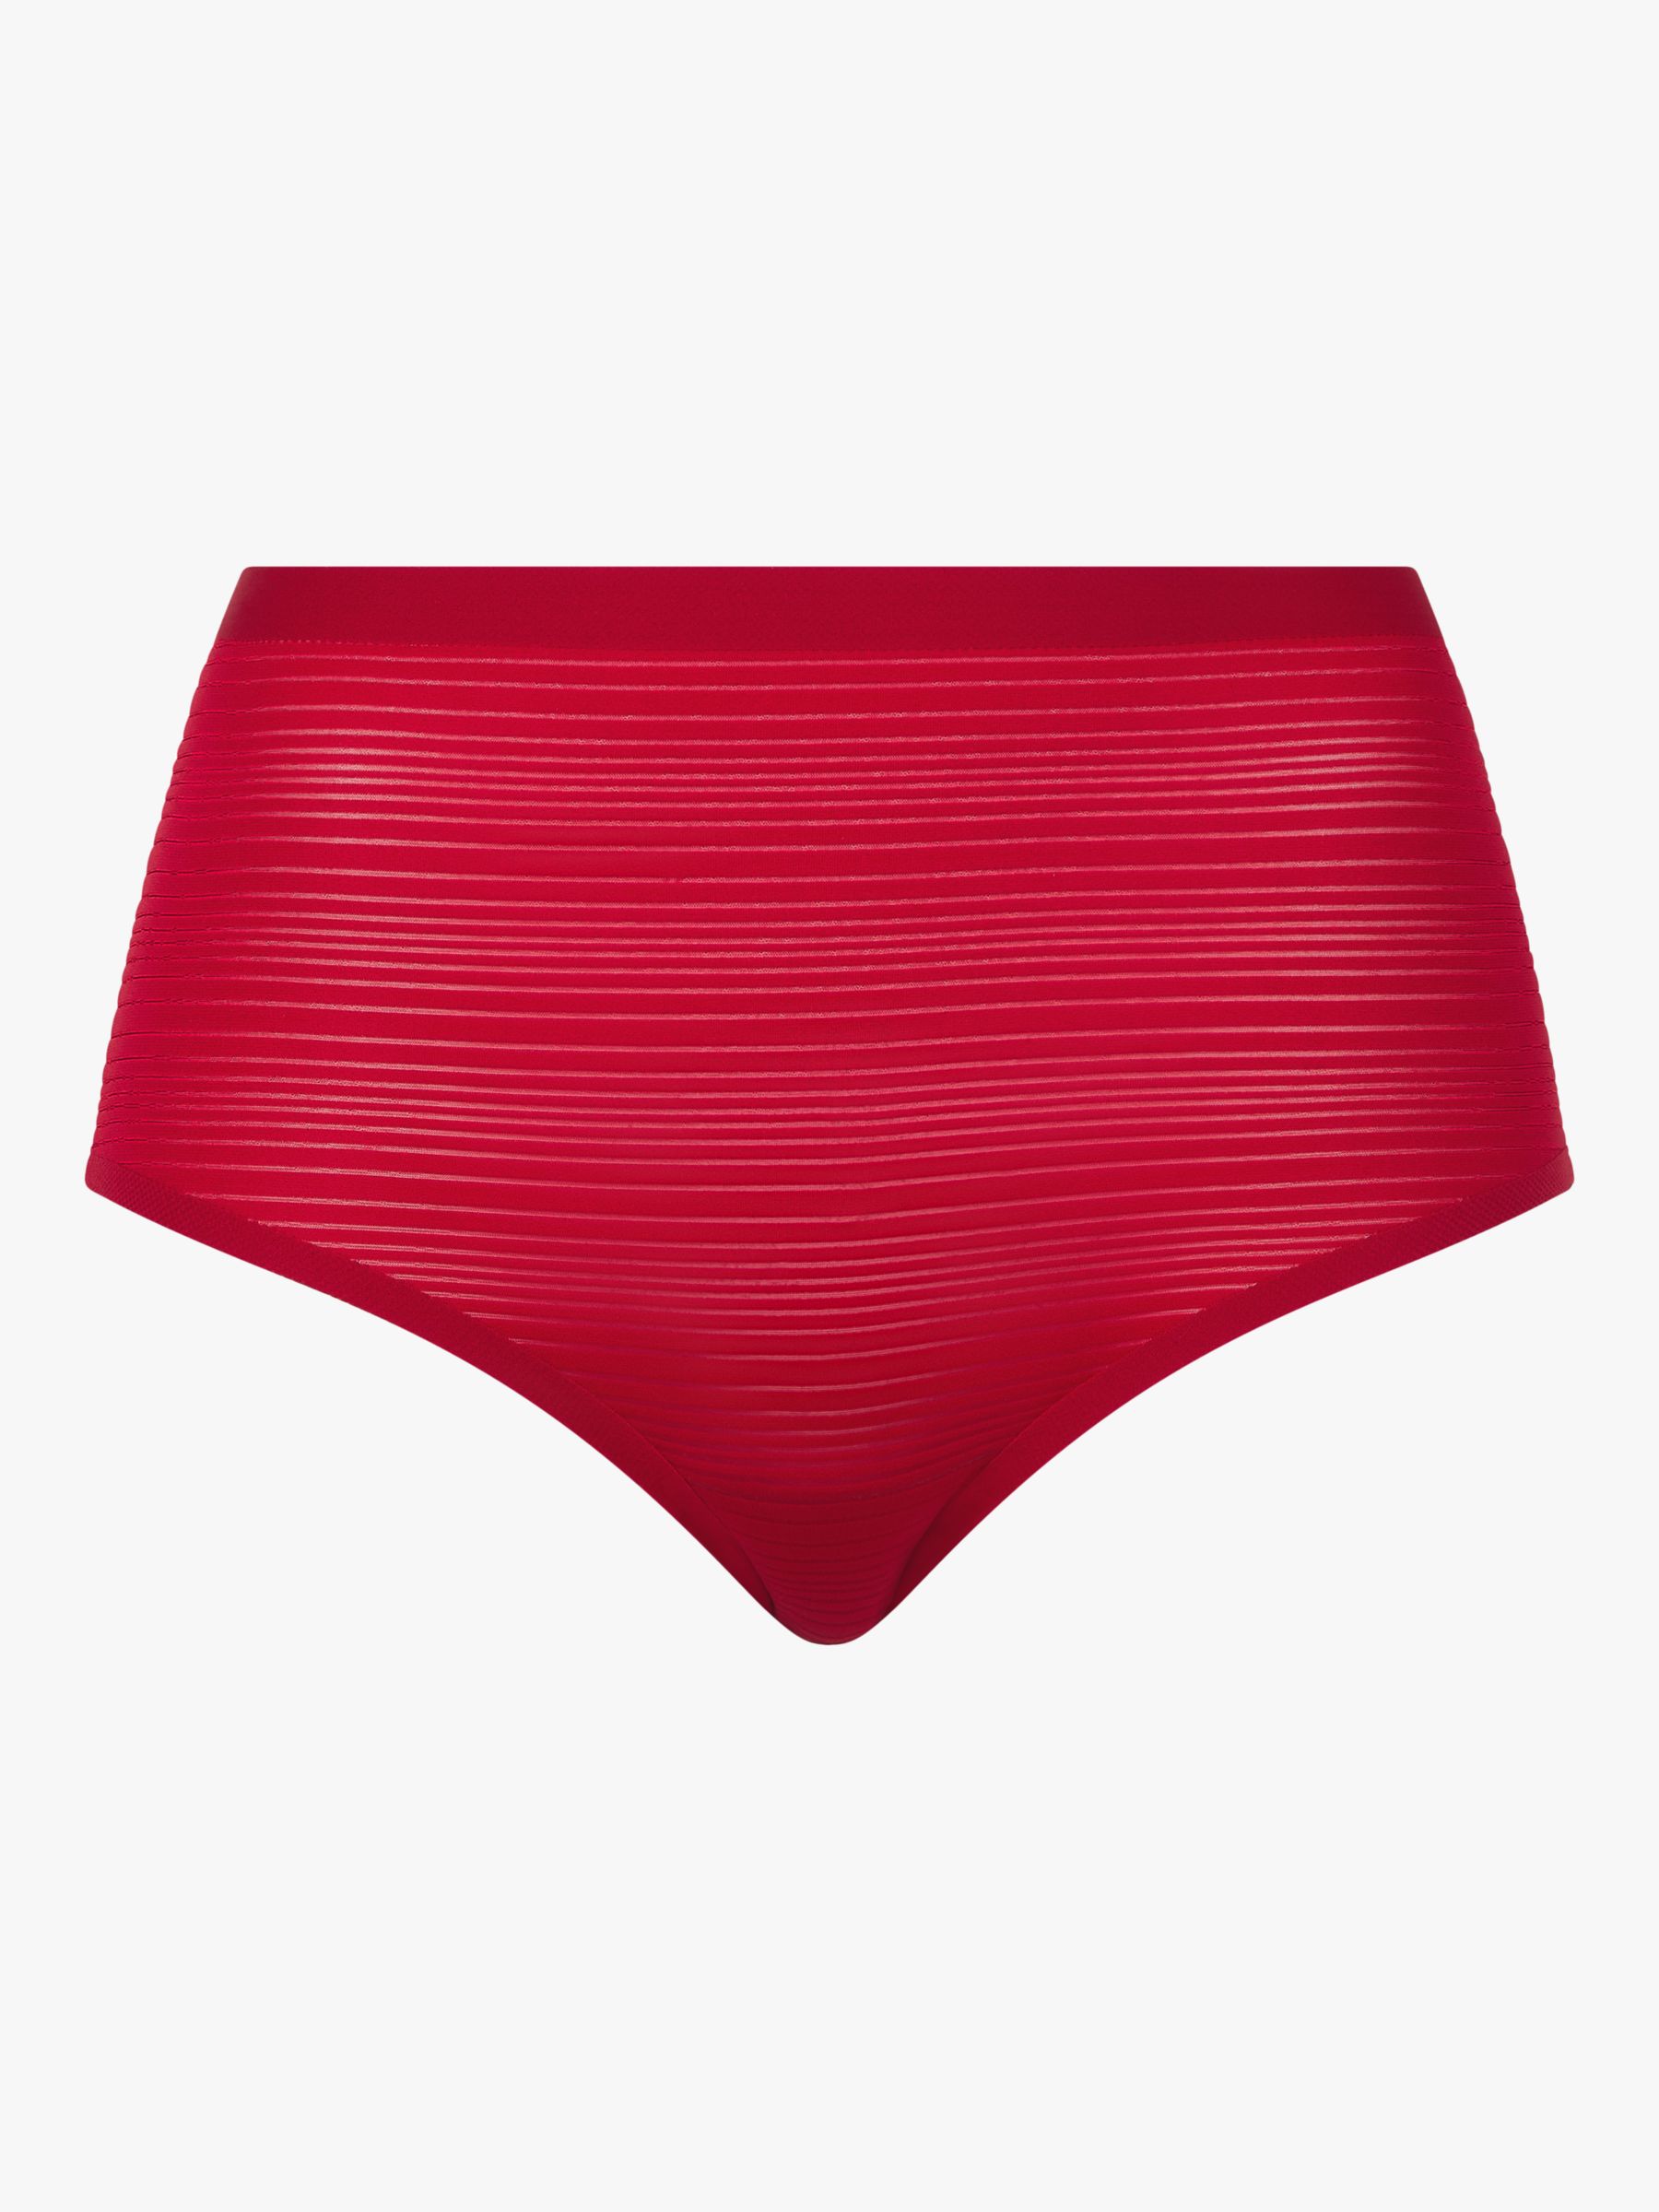 Buy Chantelle Soft Stretch Stripes High Waist Brief Online at johnlewis.com